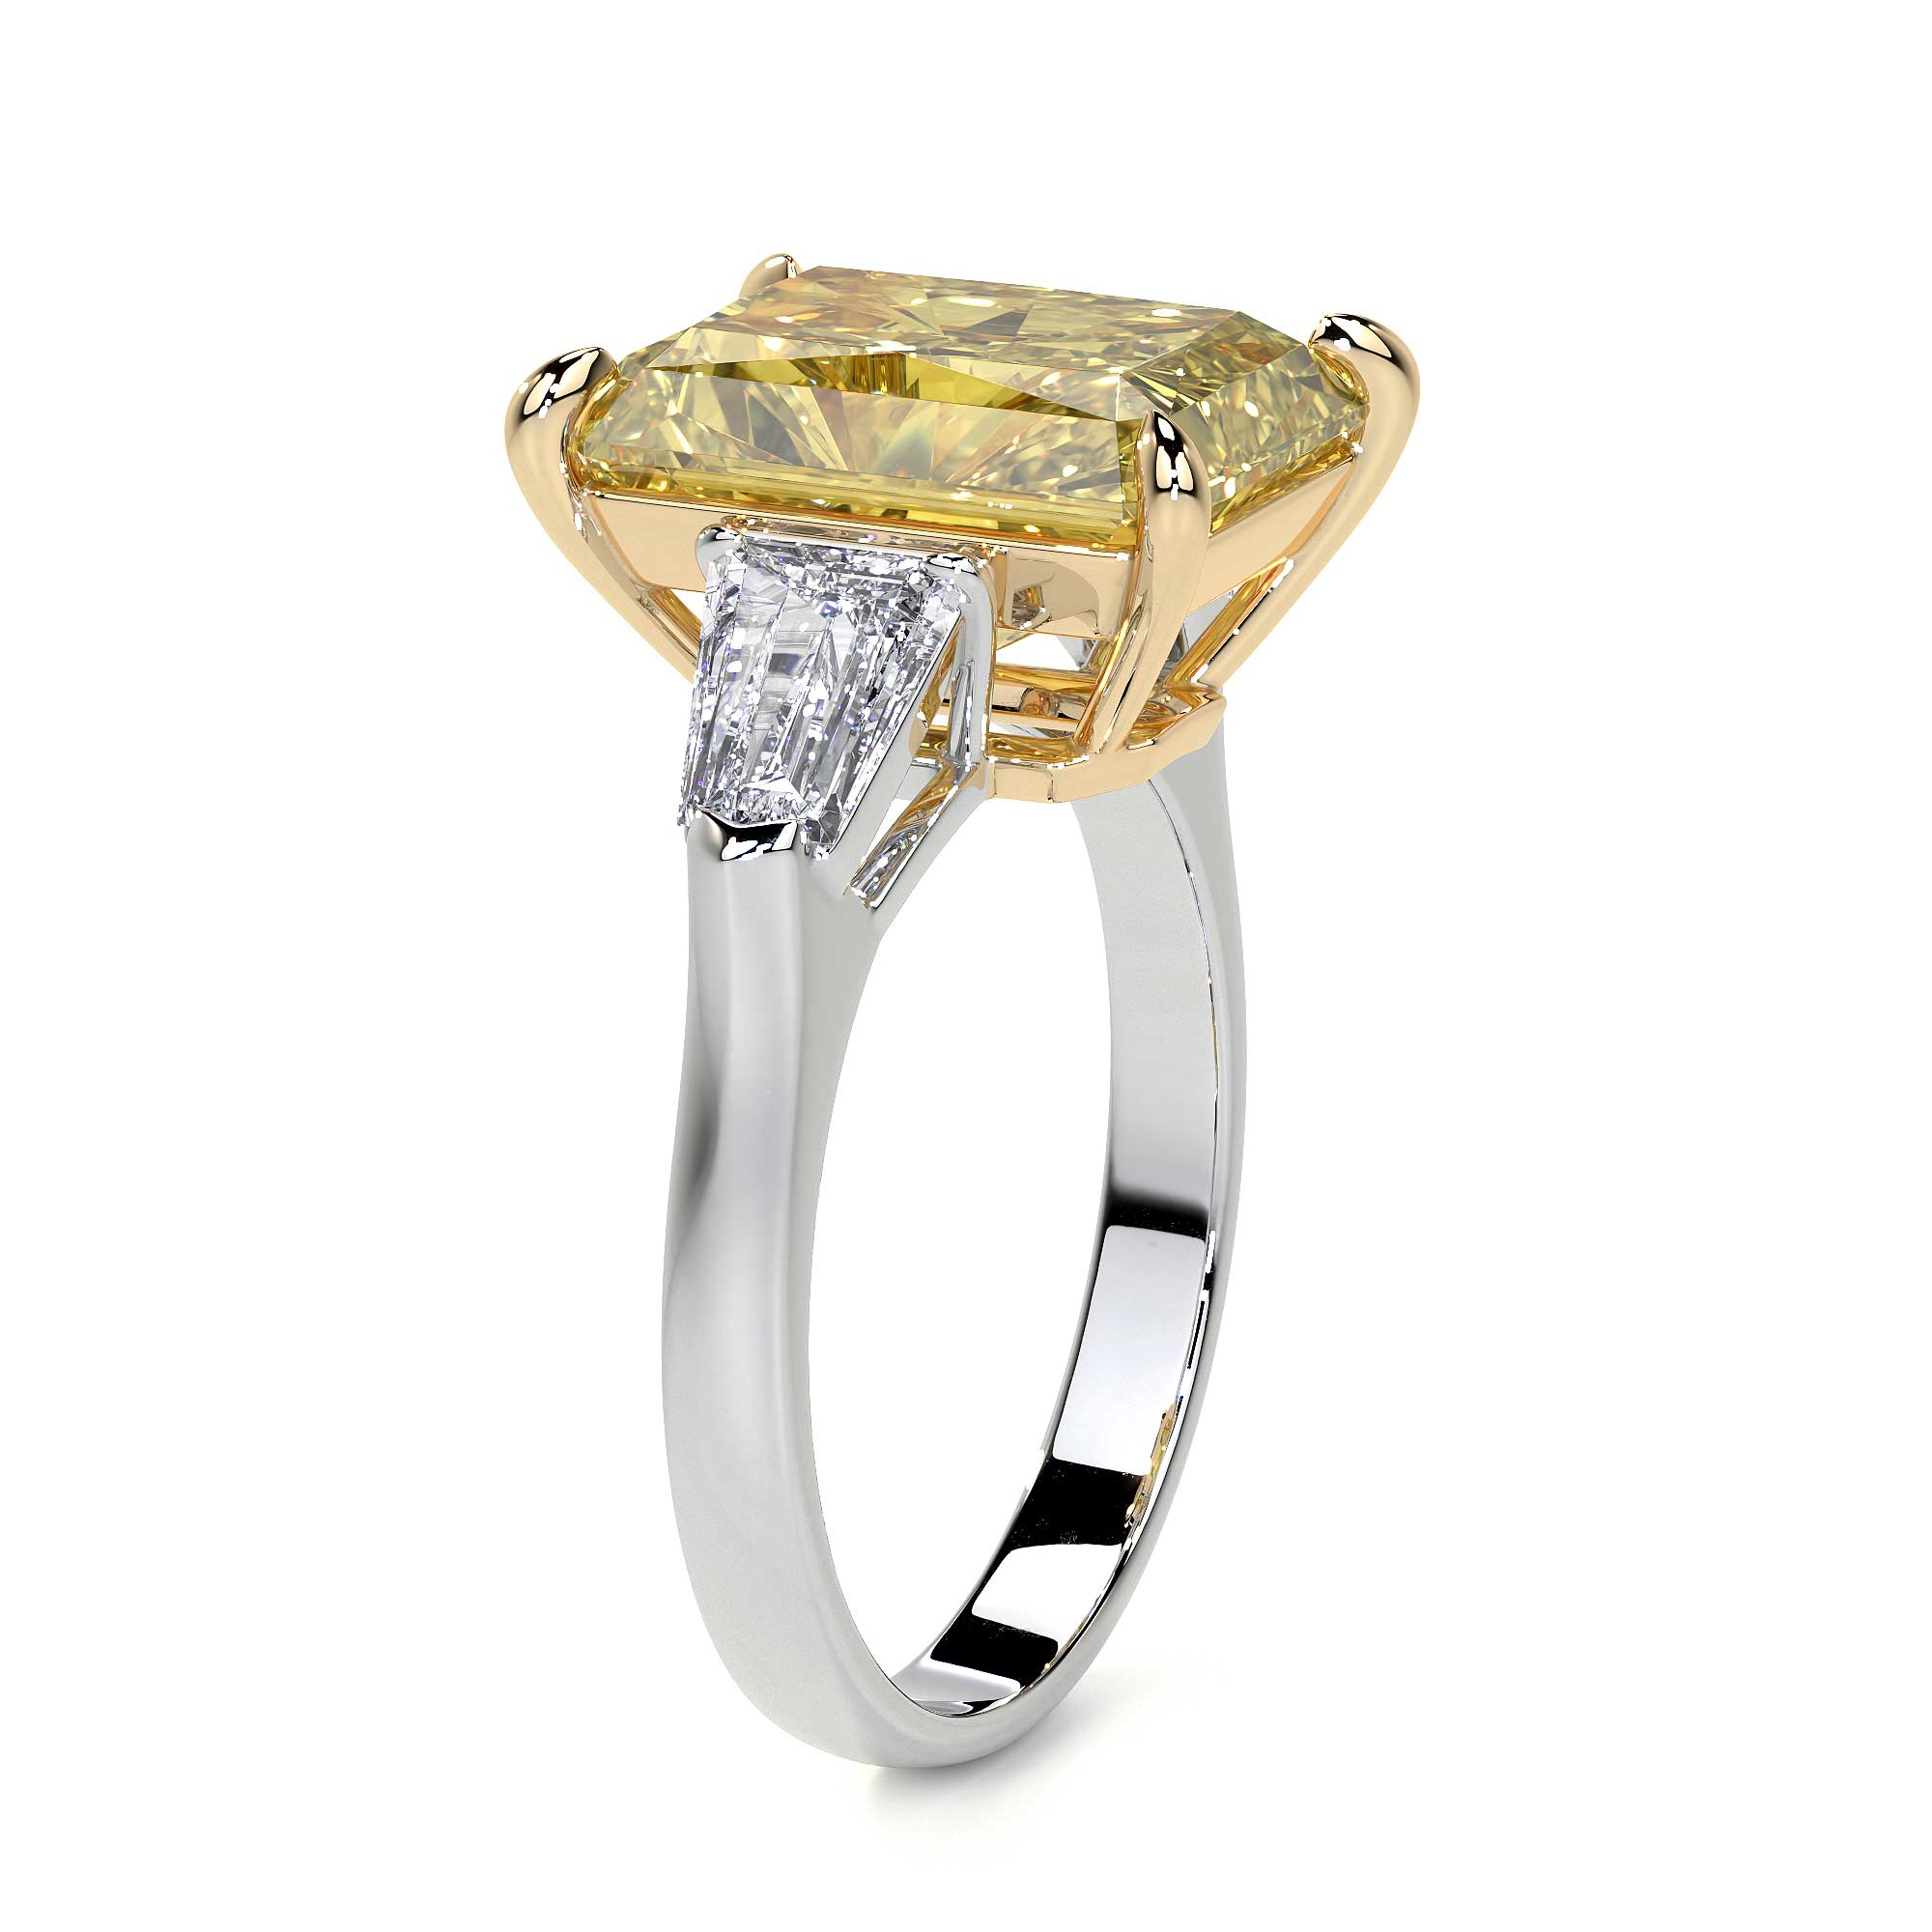 Fancy Vivid Yellow Emerald Cut Diamond Ring